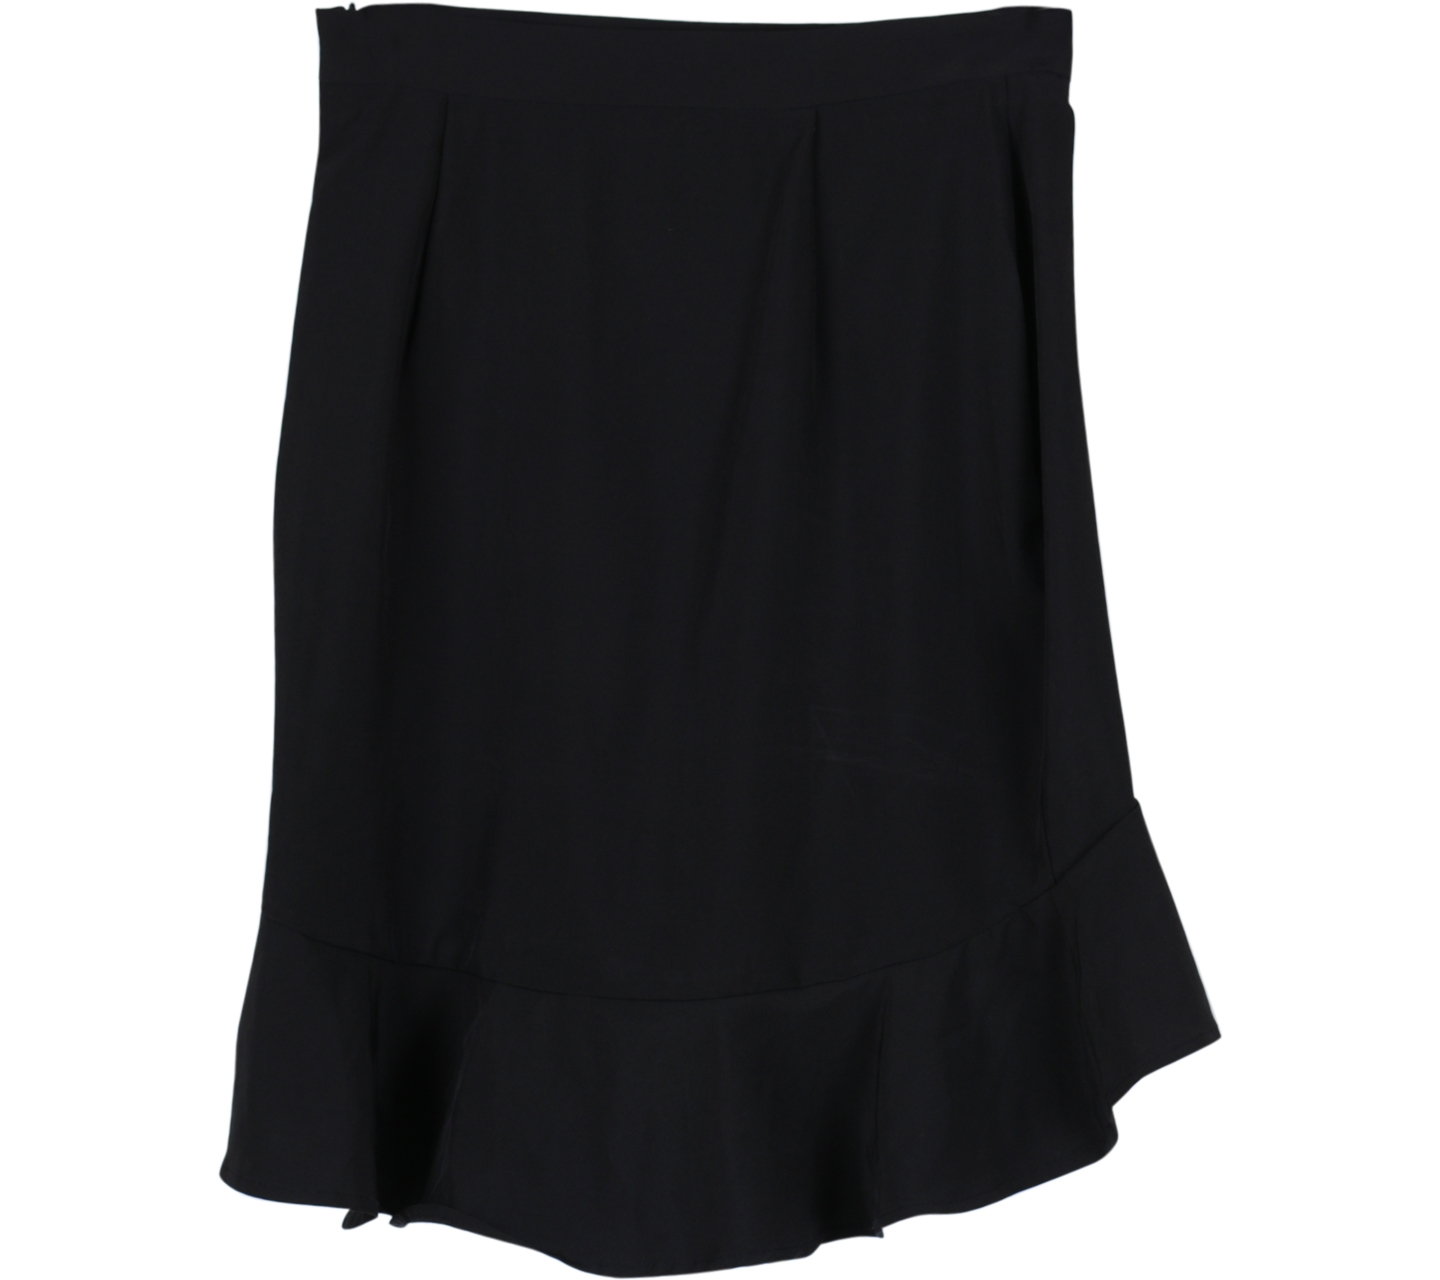 Richcoco Black Skirt